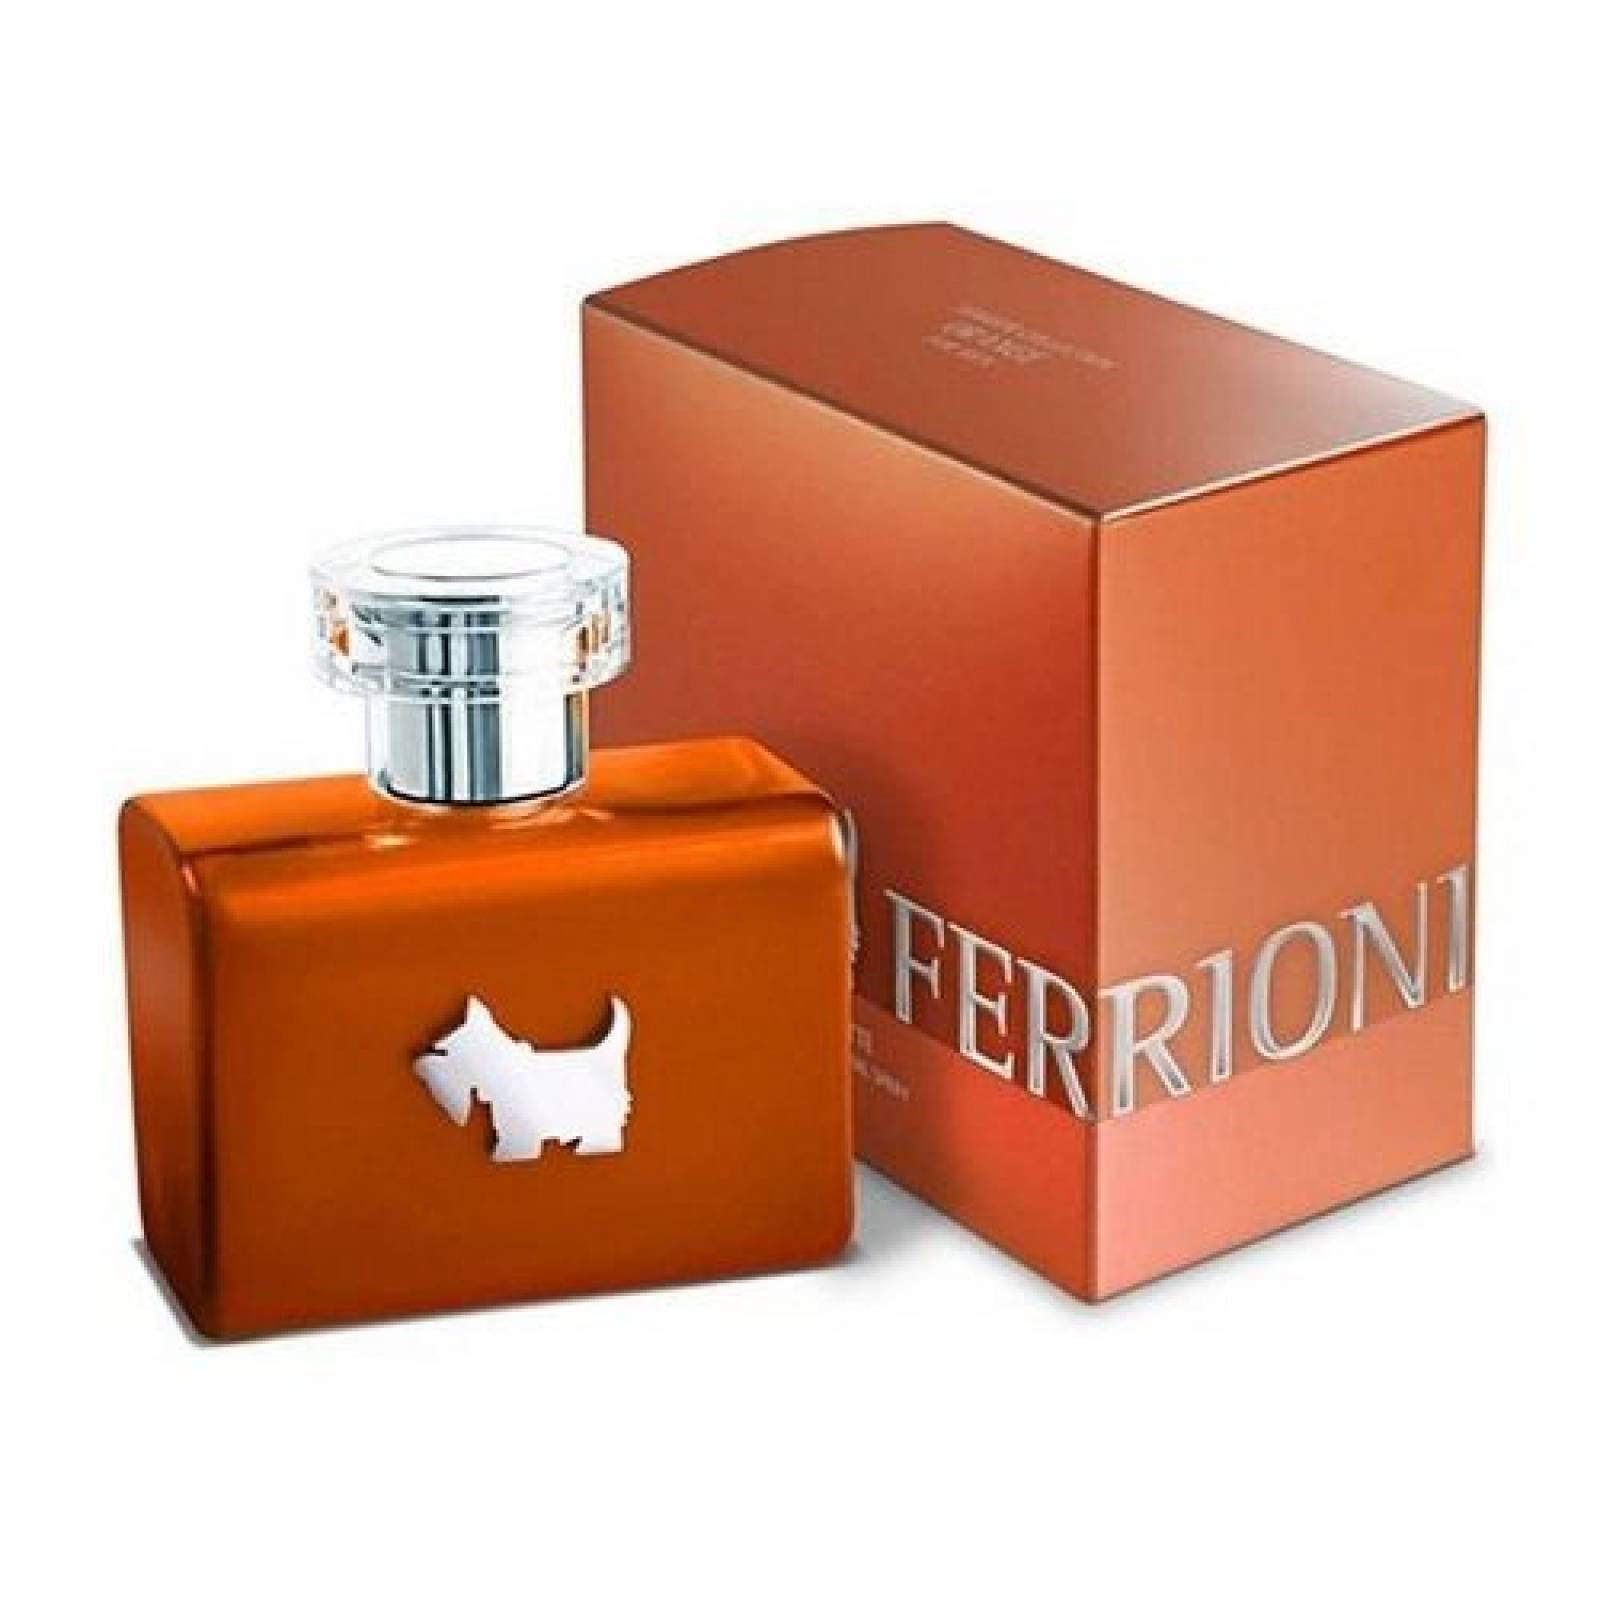 Ferrioni Orange Terrier Collection Caballero 100 Ml Edt